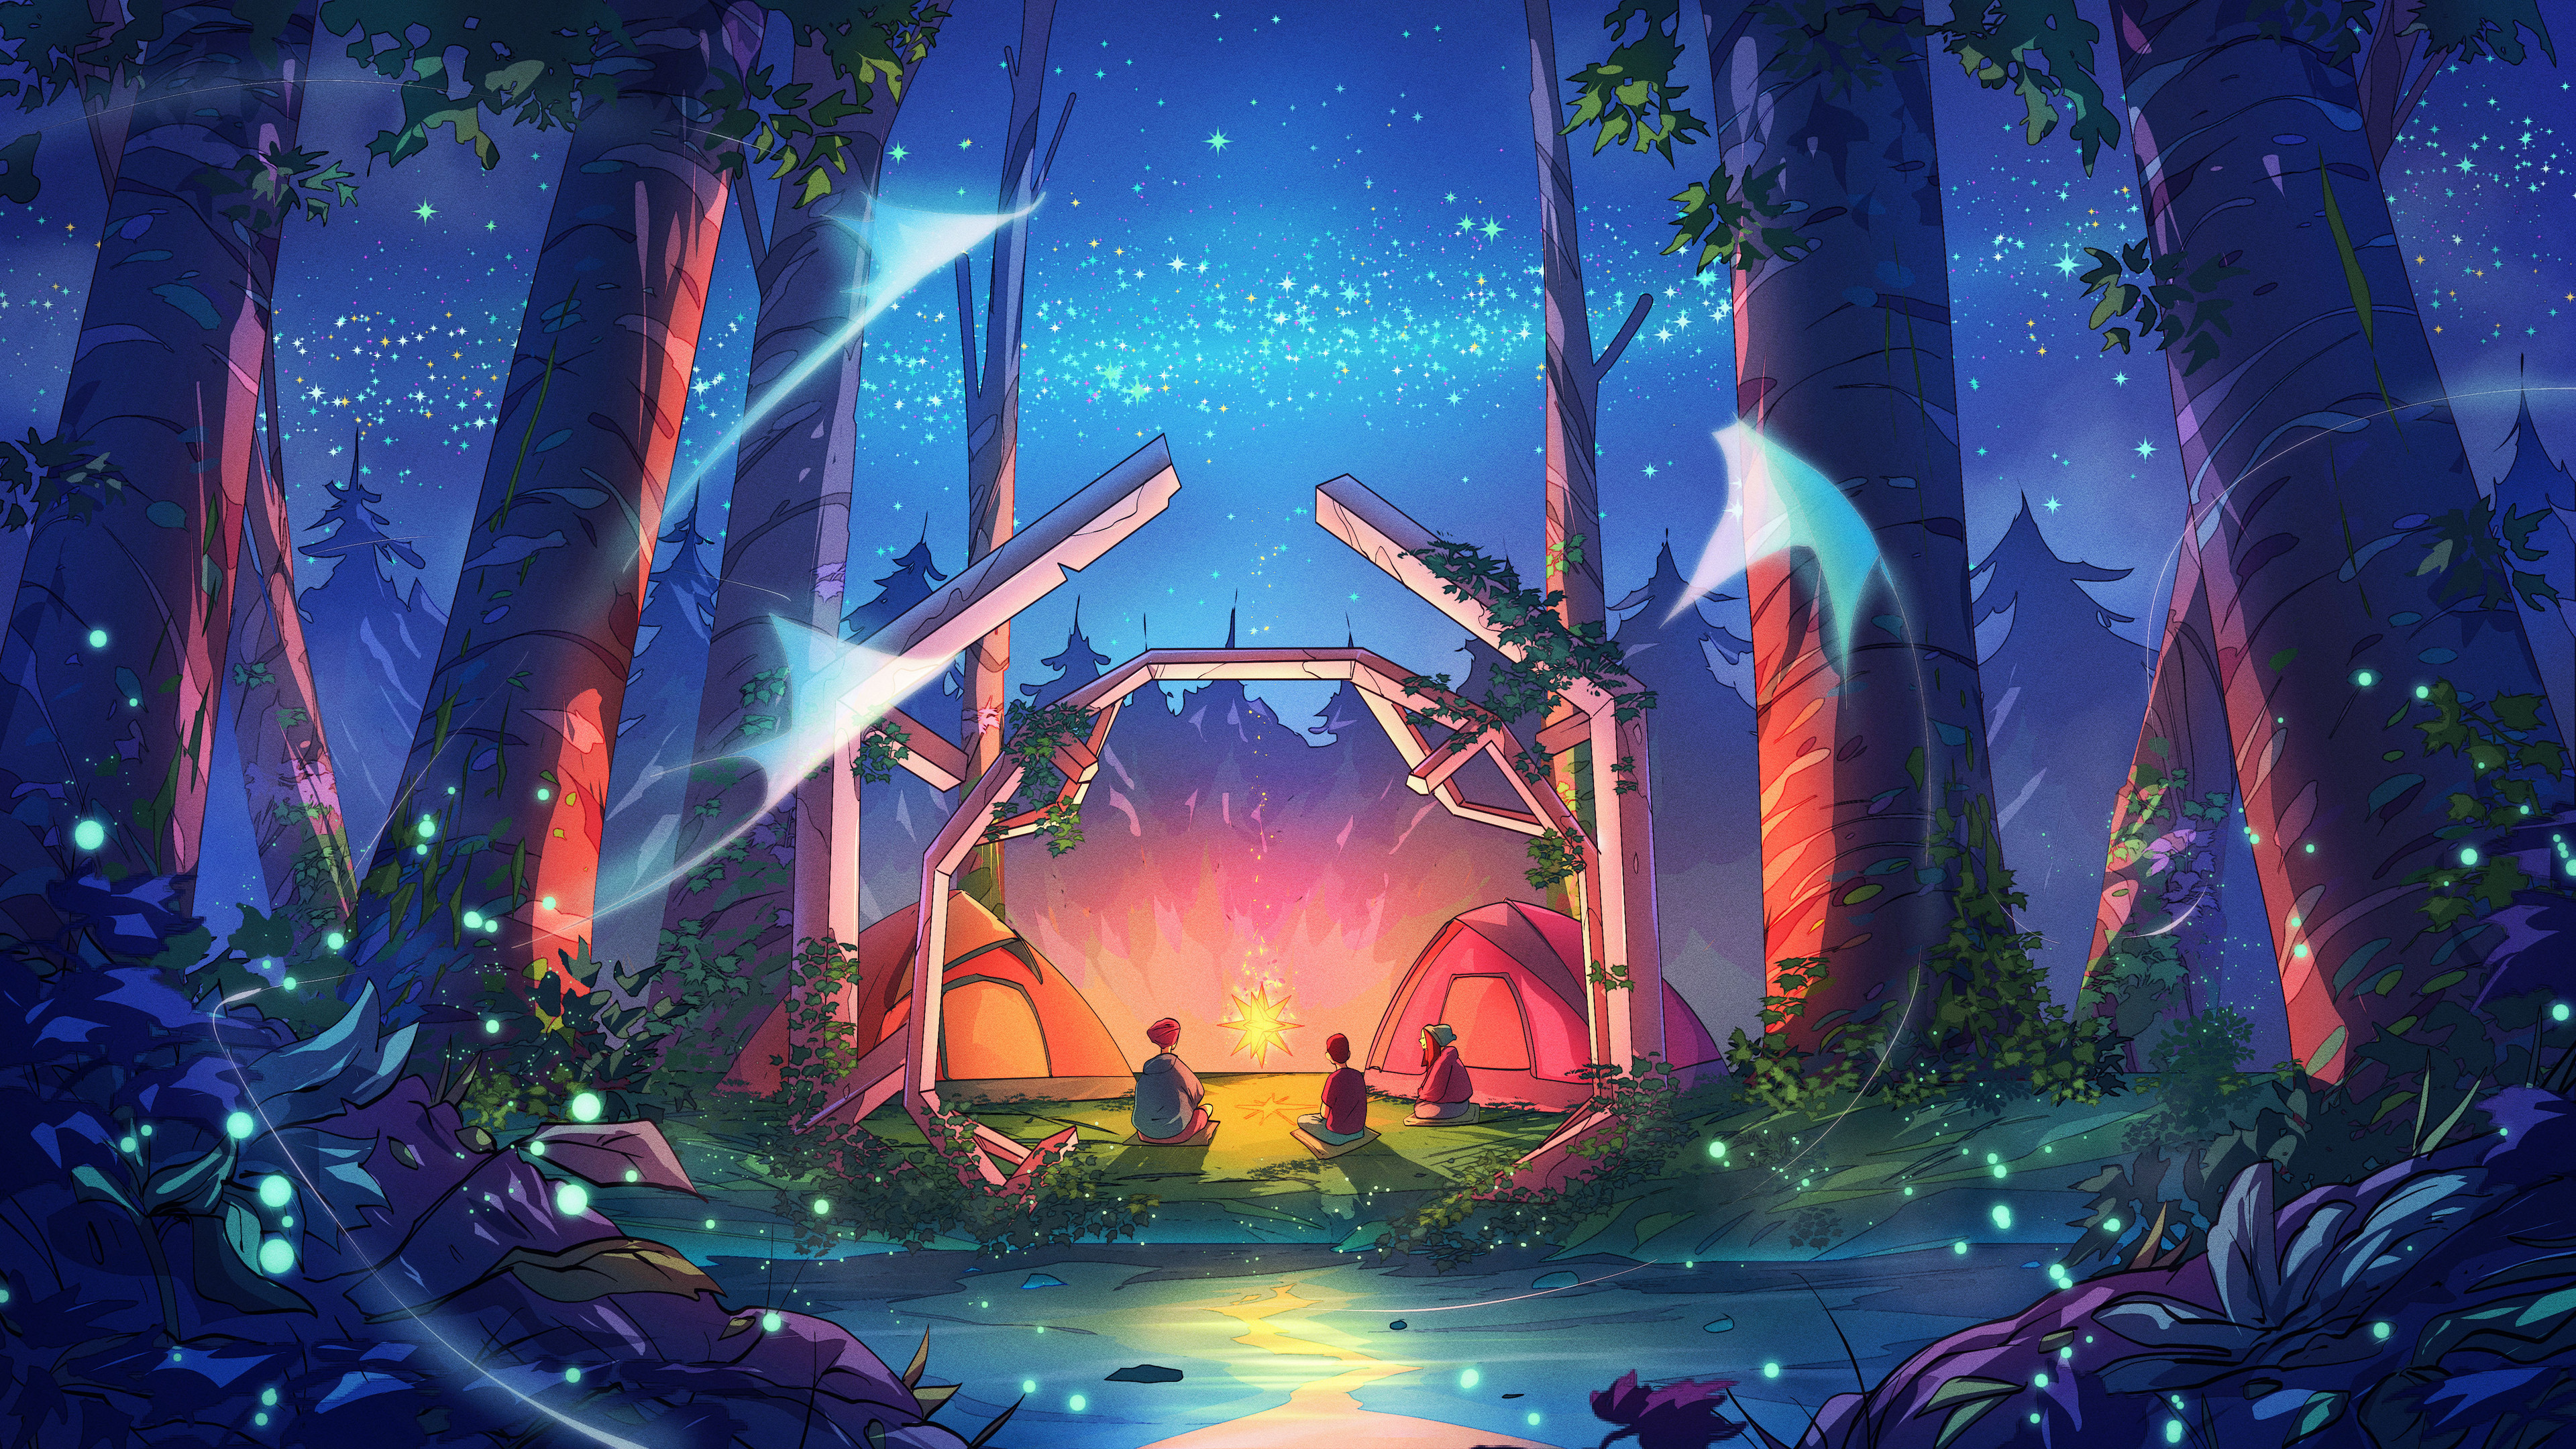 Christian Benavides Digital Art Fantasy Art Manta Rays Forest Camping Tent Stars Night Arch 3840x2160